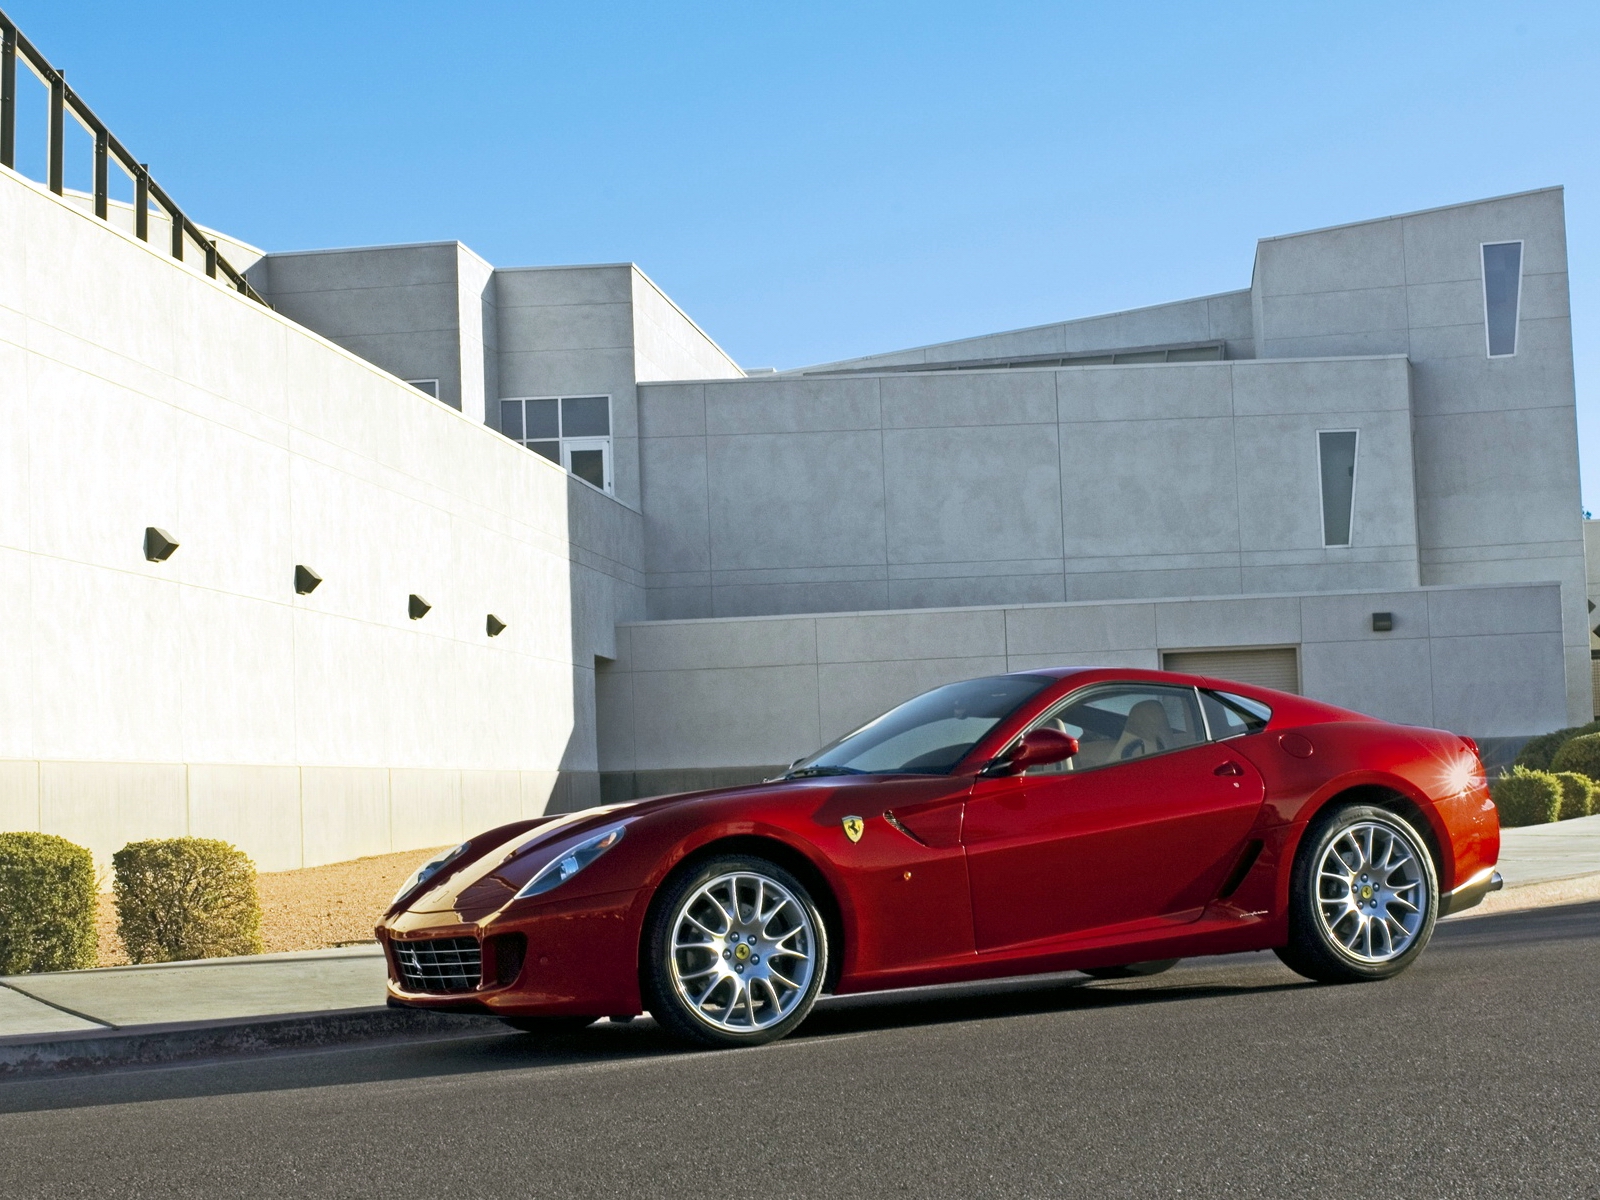 Download High quality Ferrari wallpaper / Cars / 1600x1200